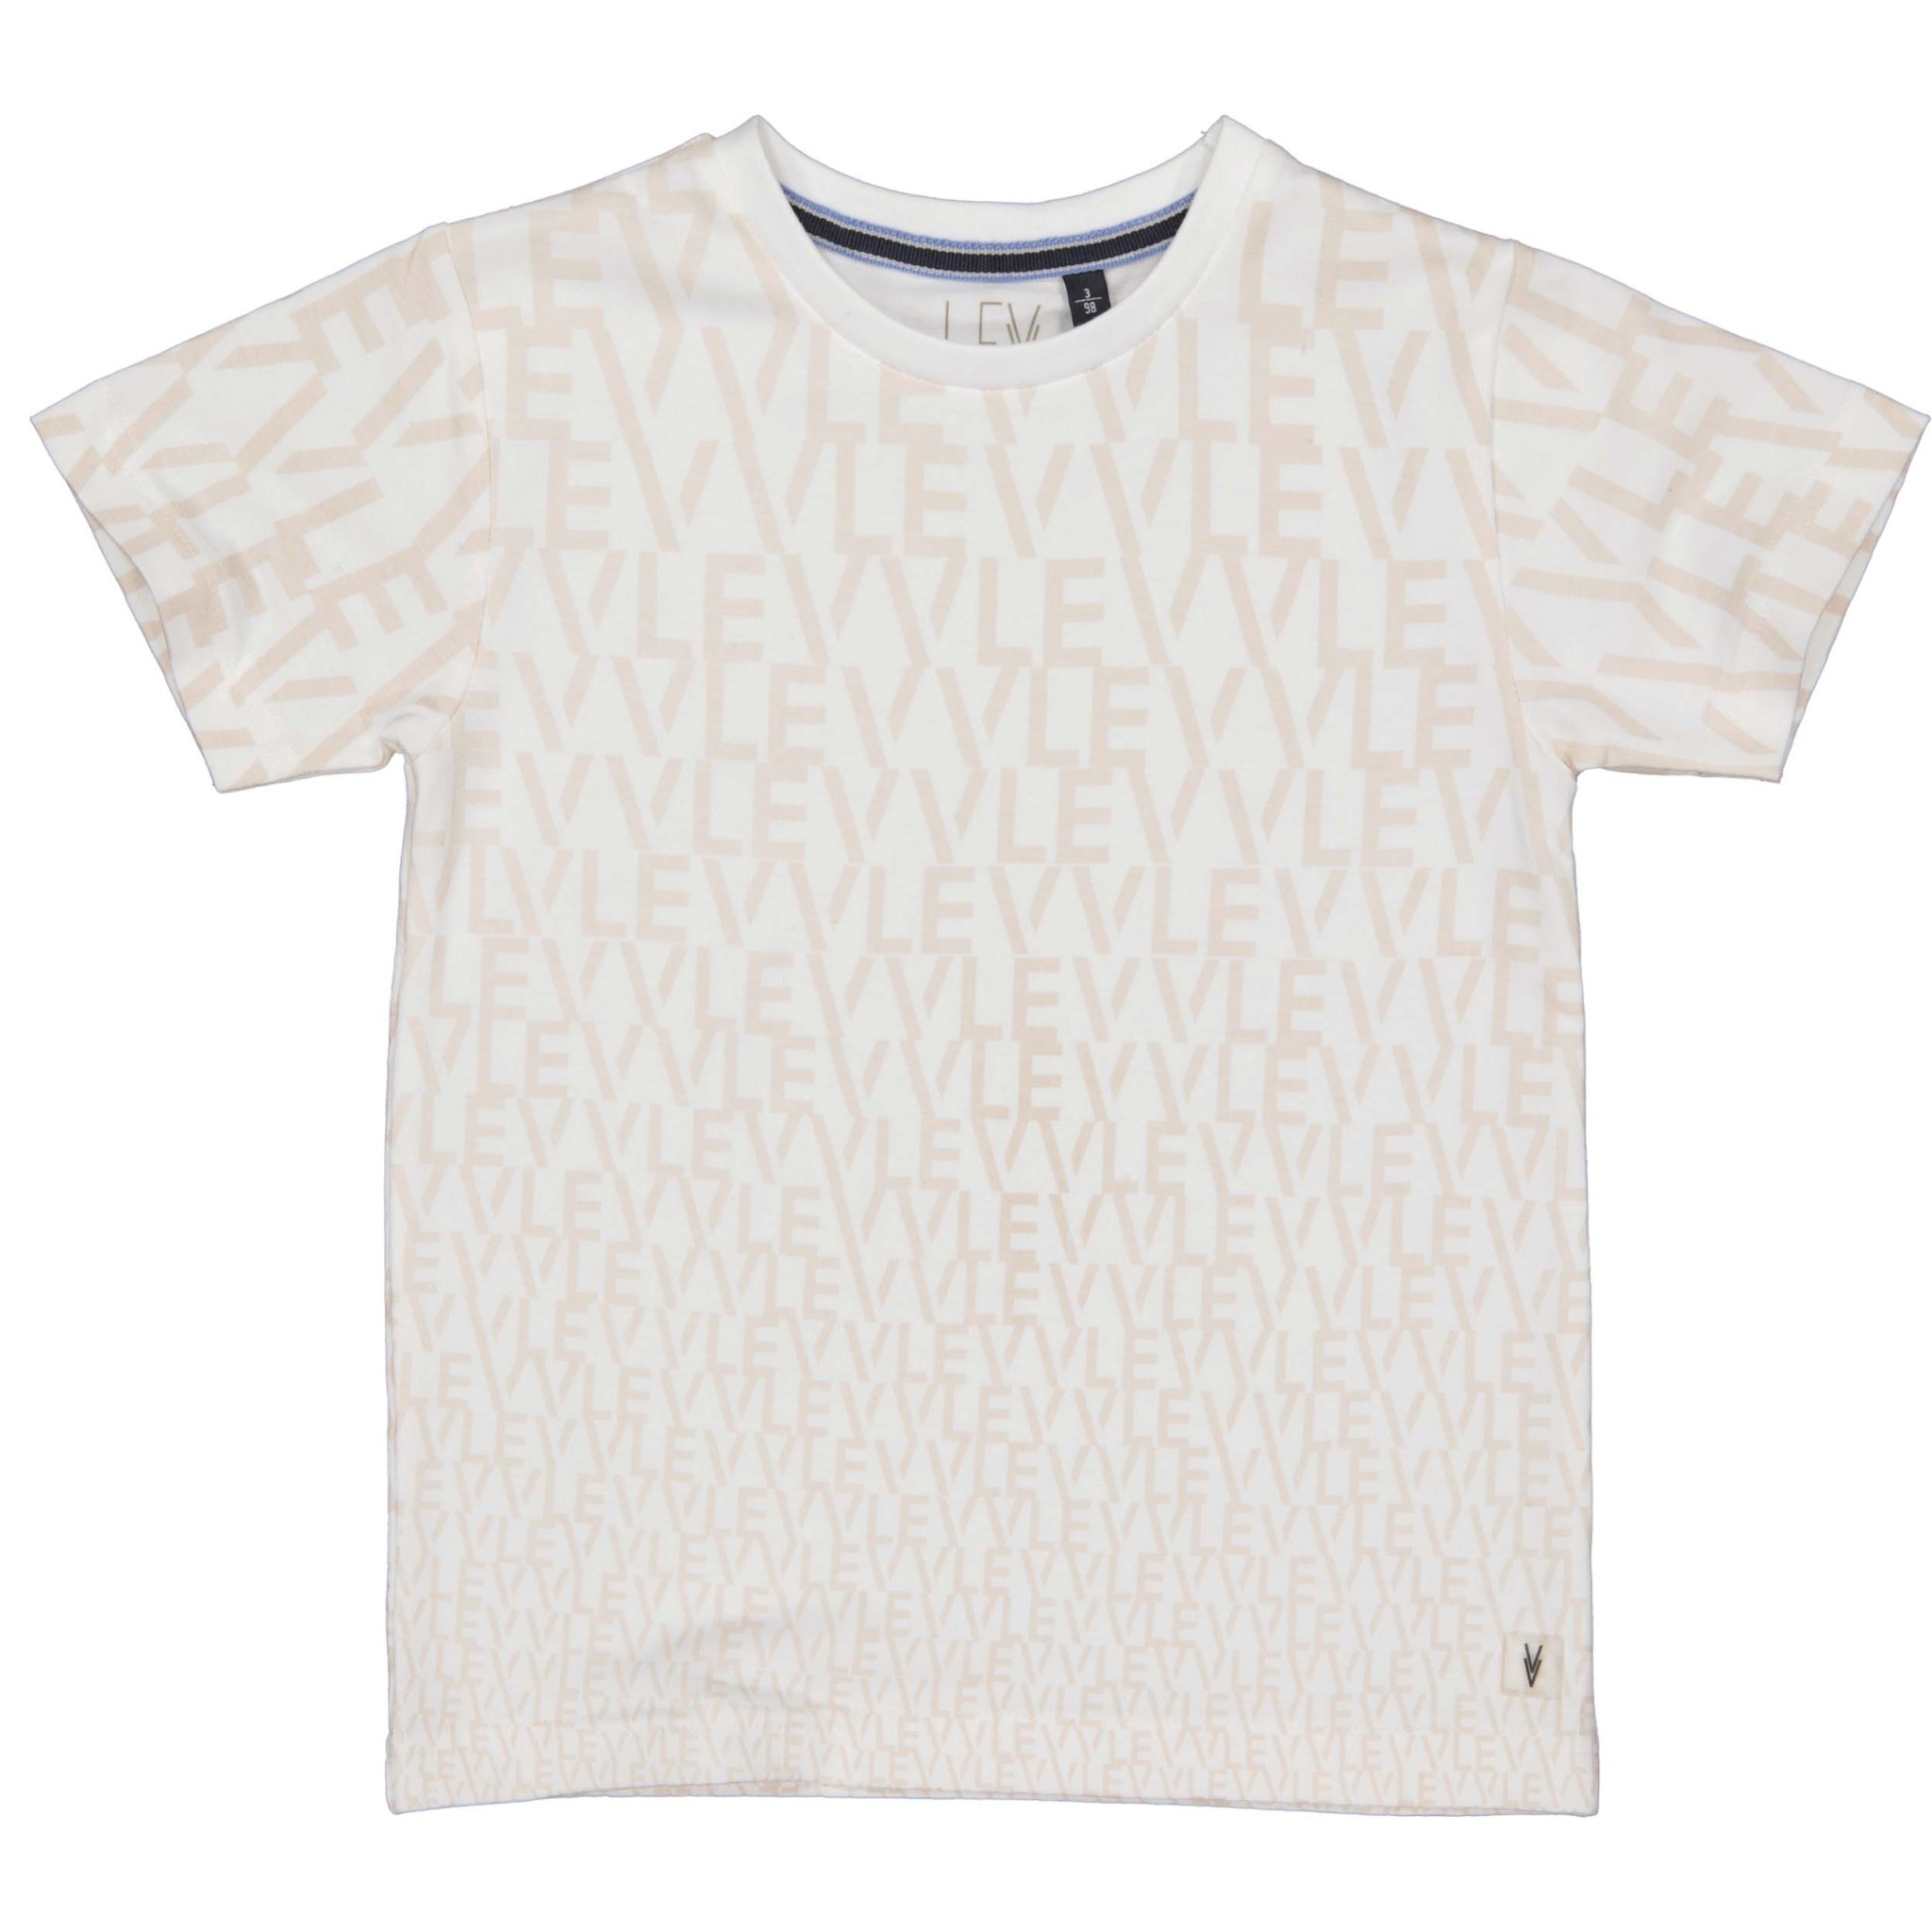 Levv Levv shirt Mark White text S42